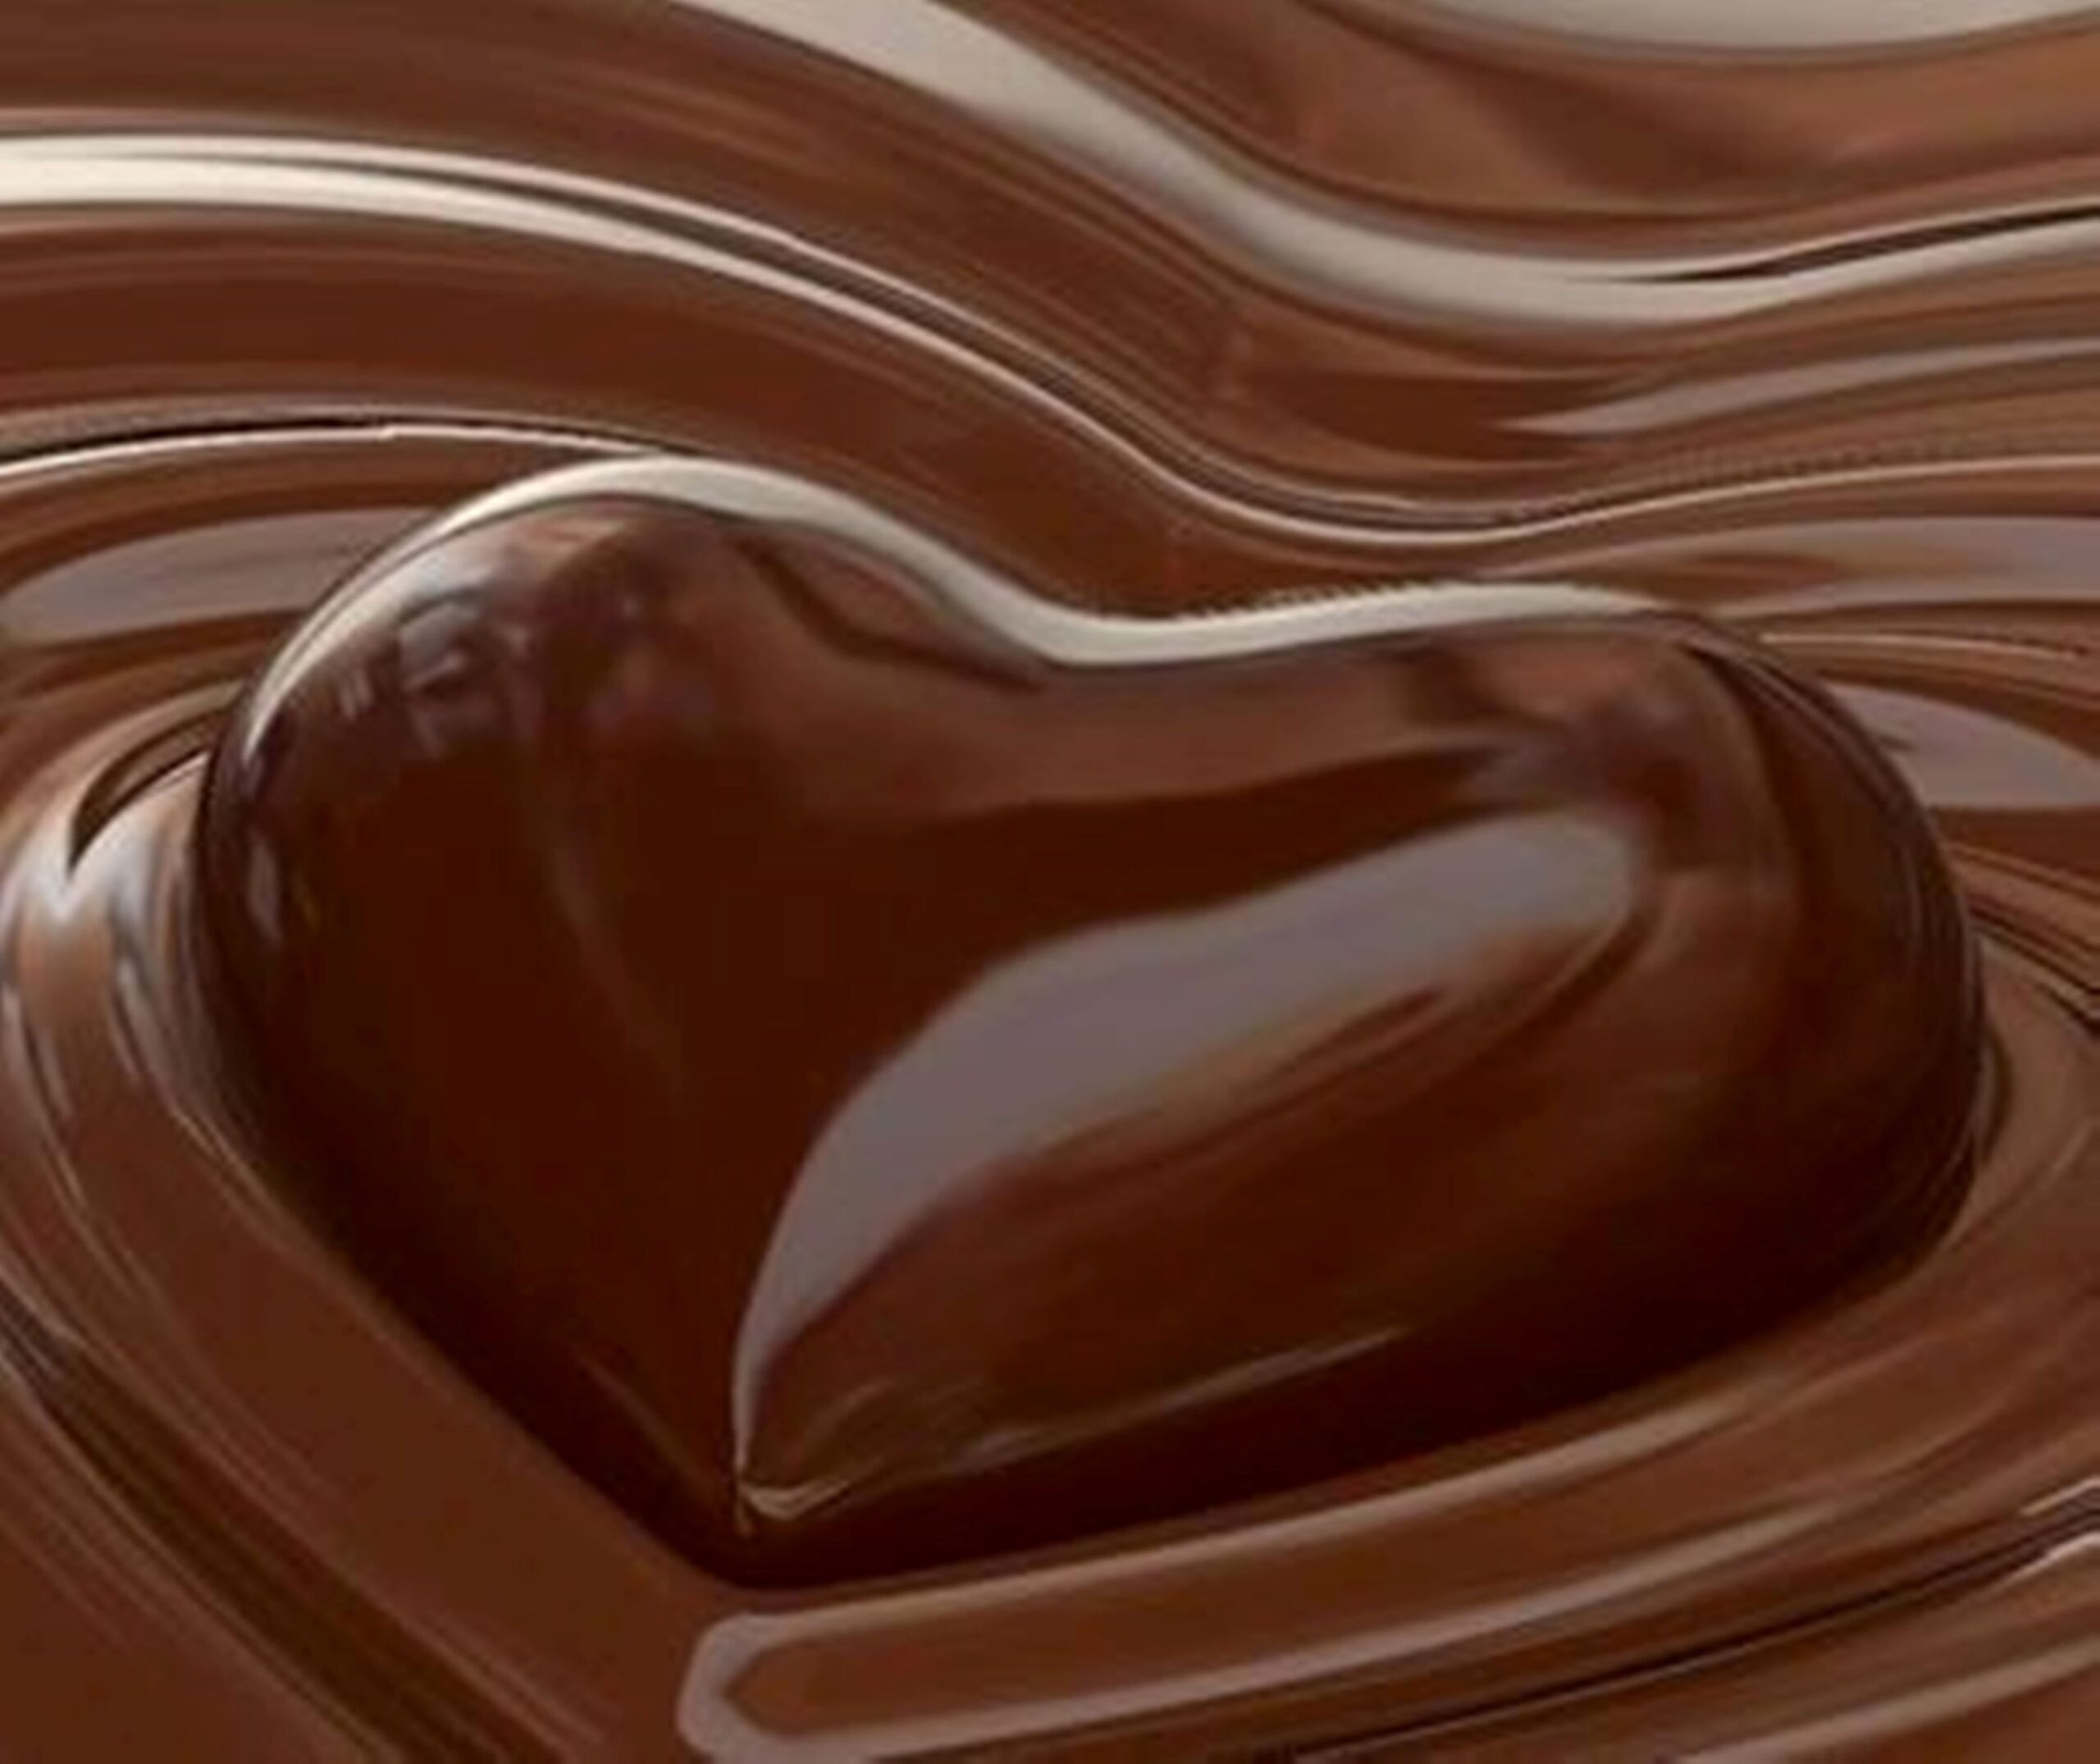 chocolate, history of chocolate